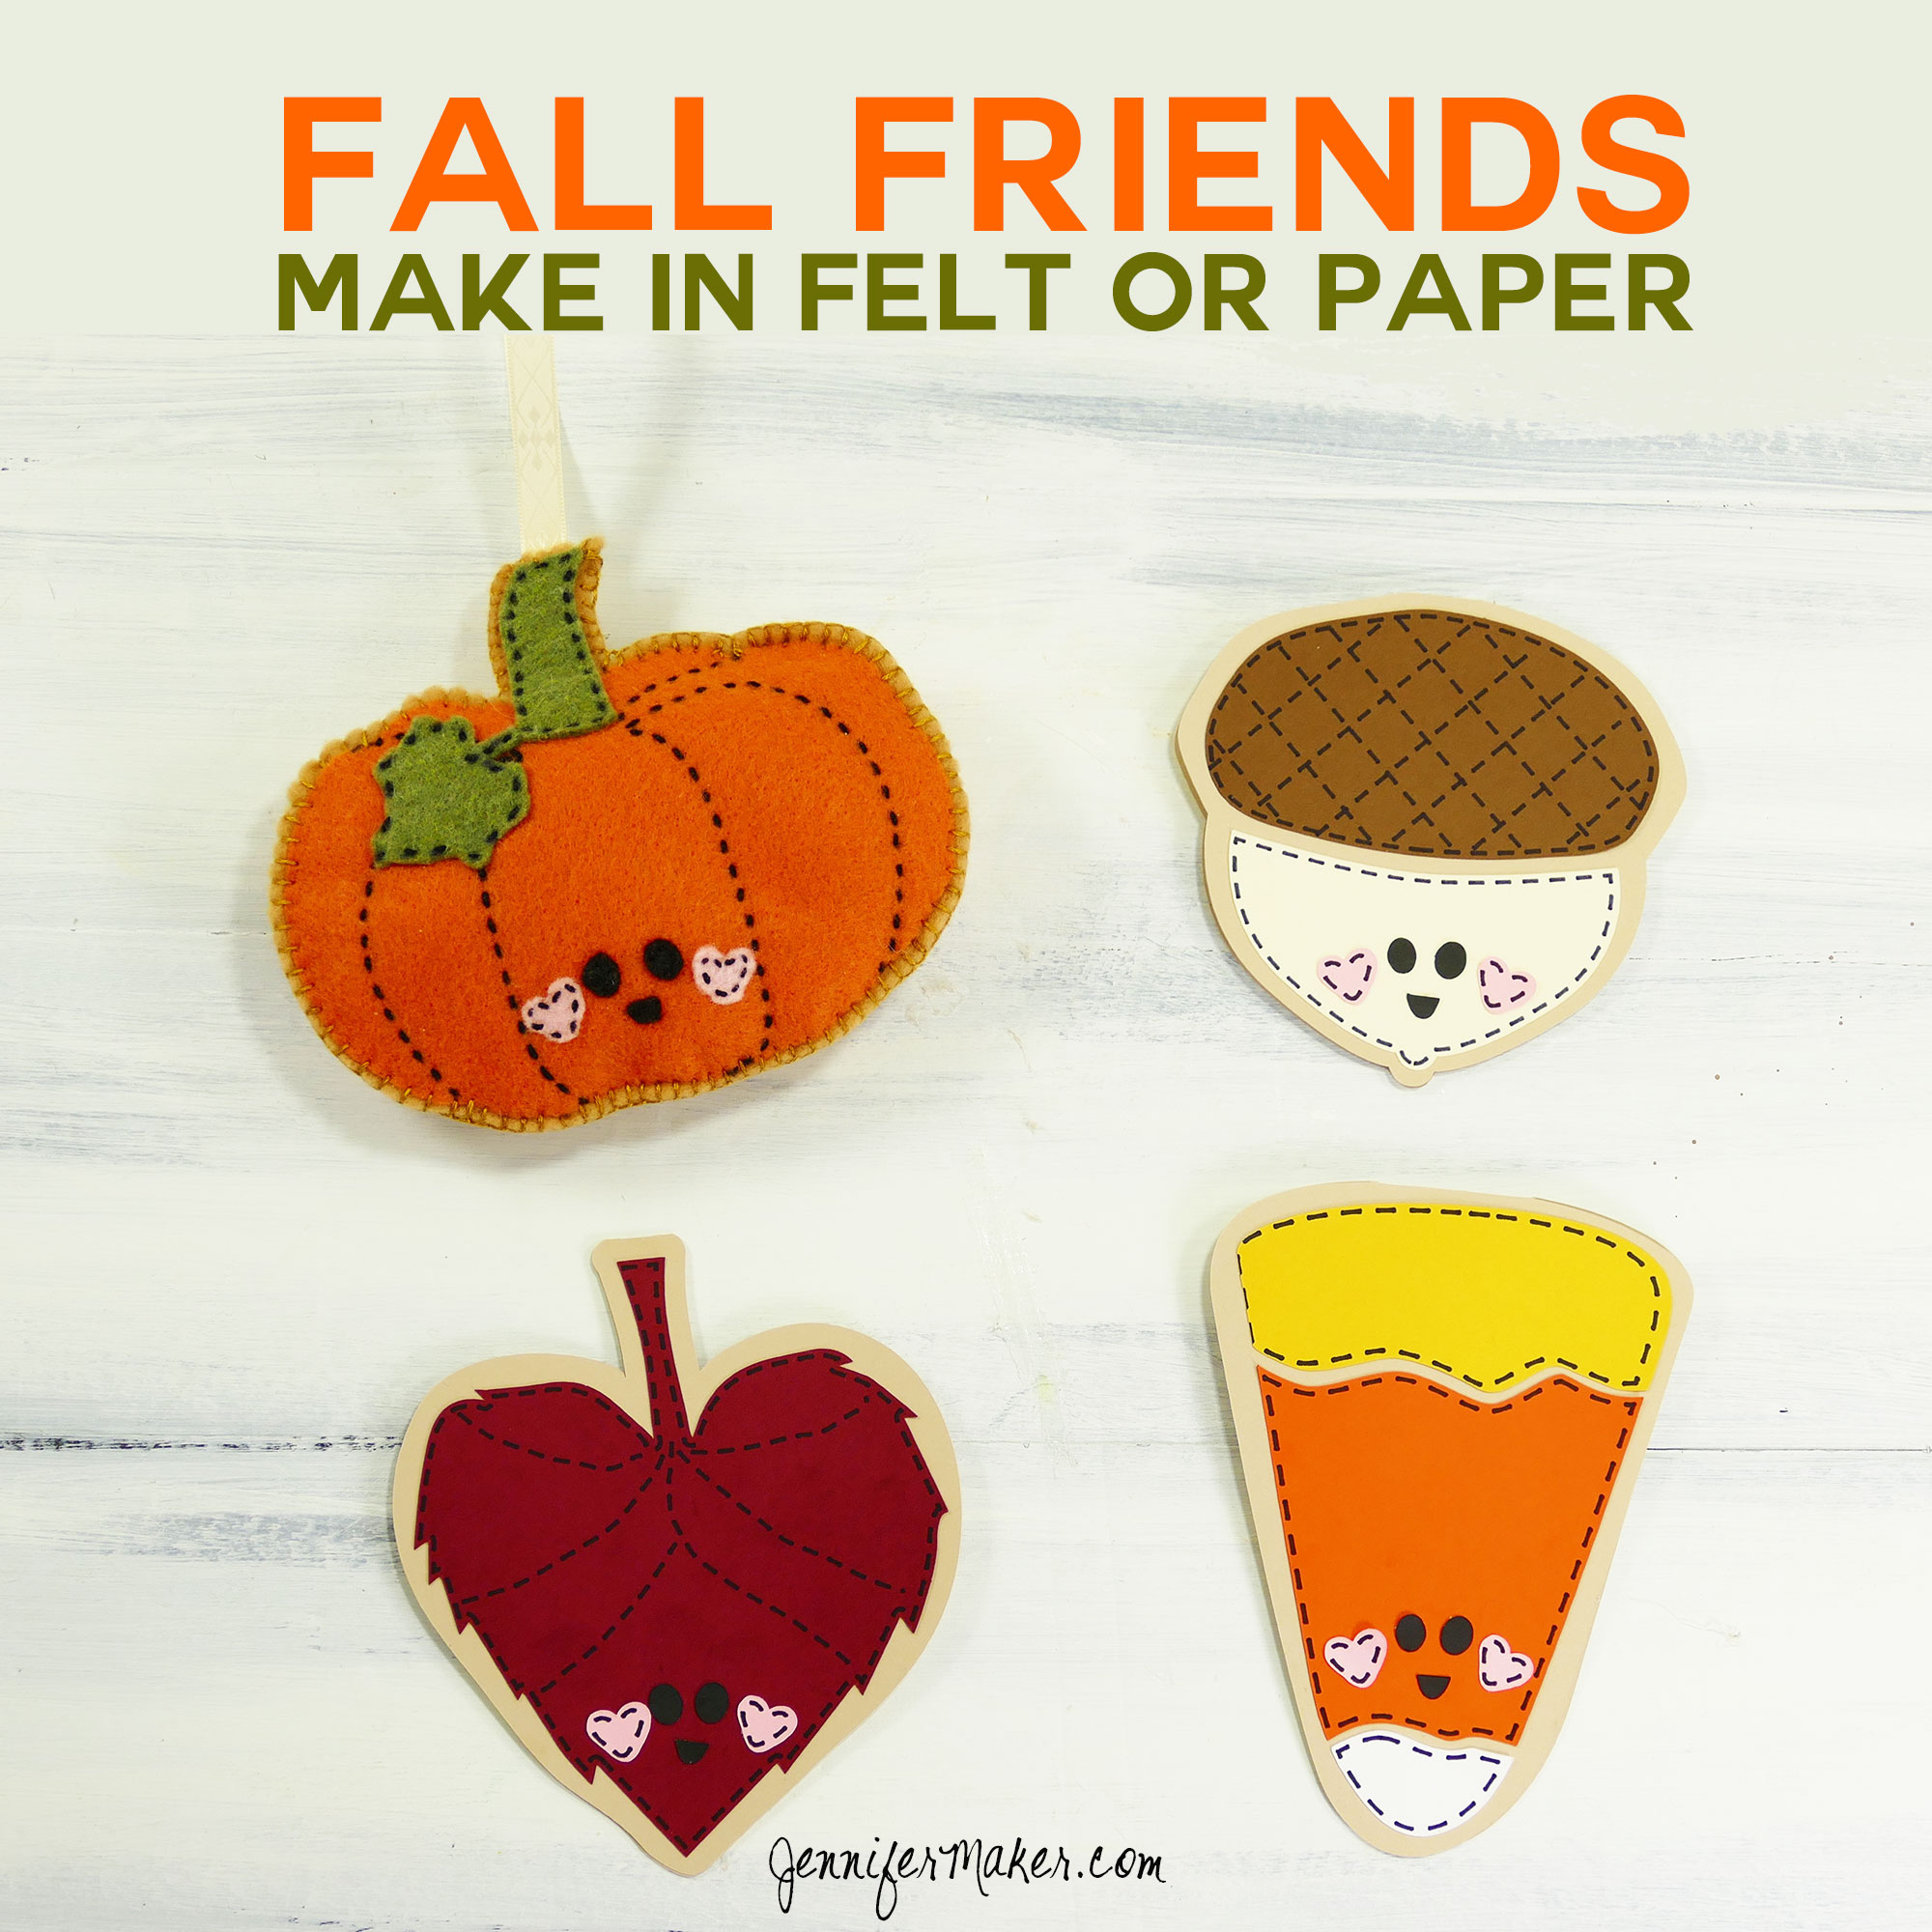 Fall Friends: Autumn Felt Ornaments and Cards